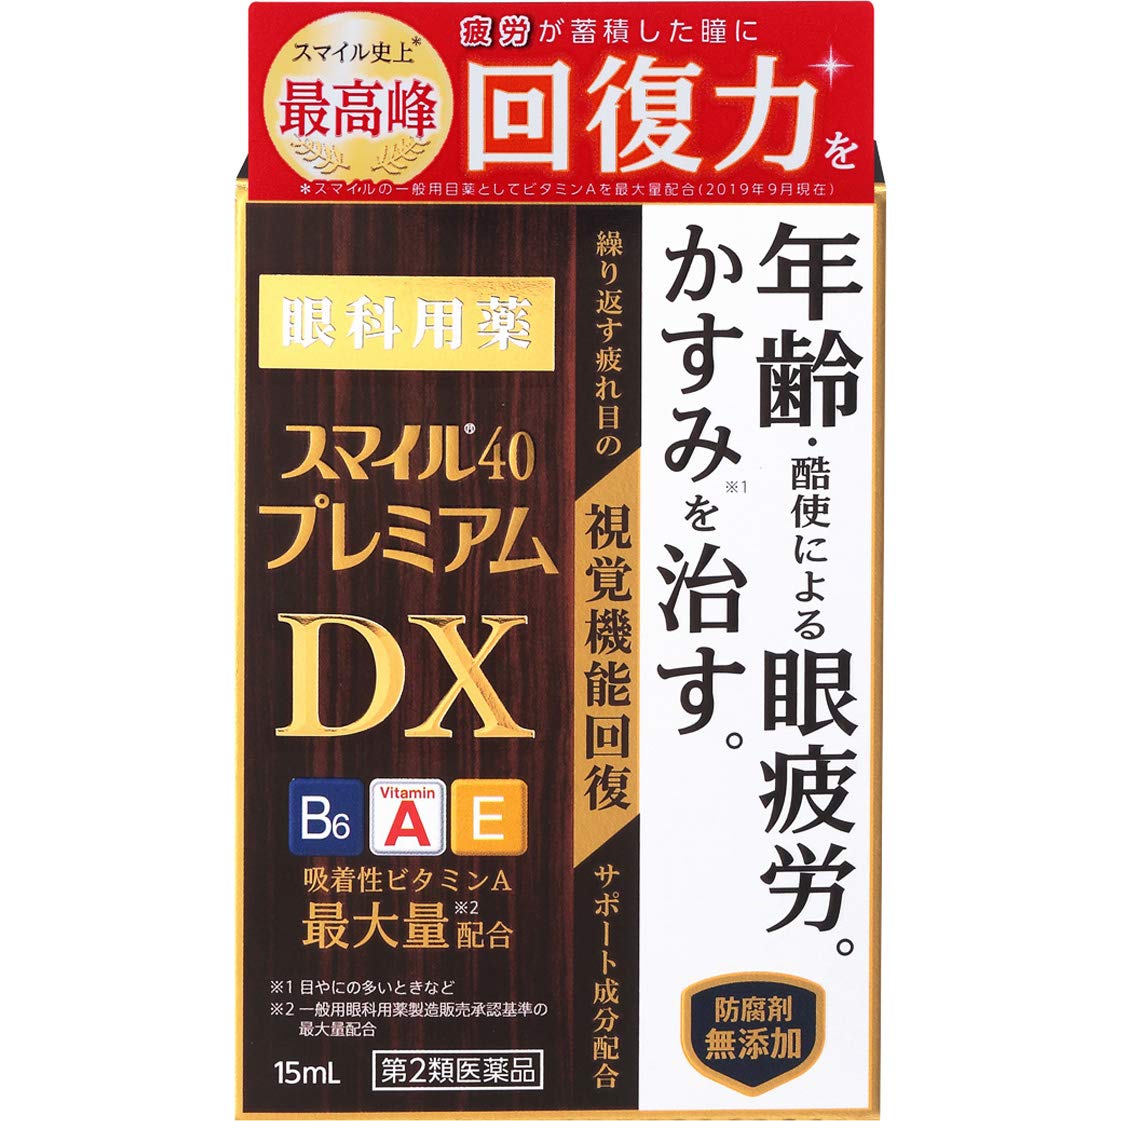 Lion Smile Premium DX - Anti-aging eye drops